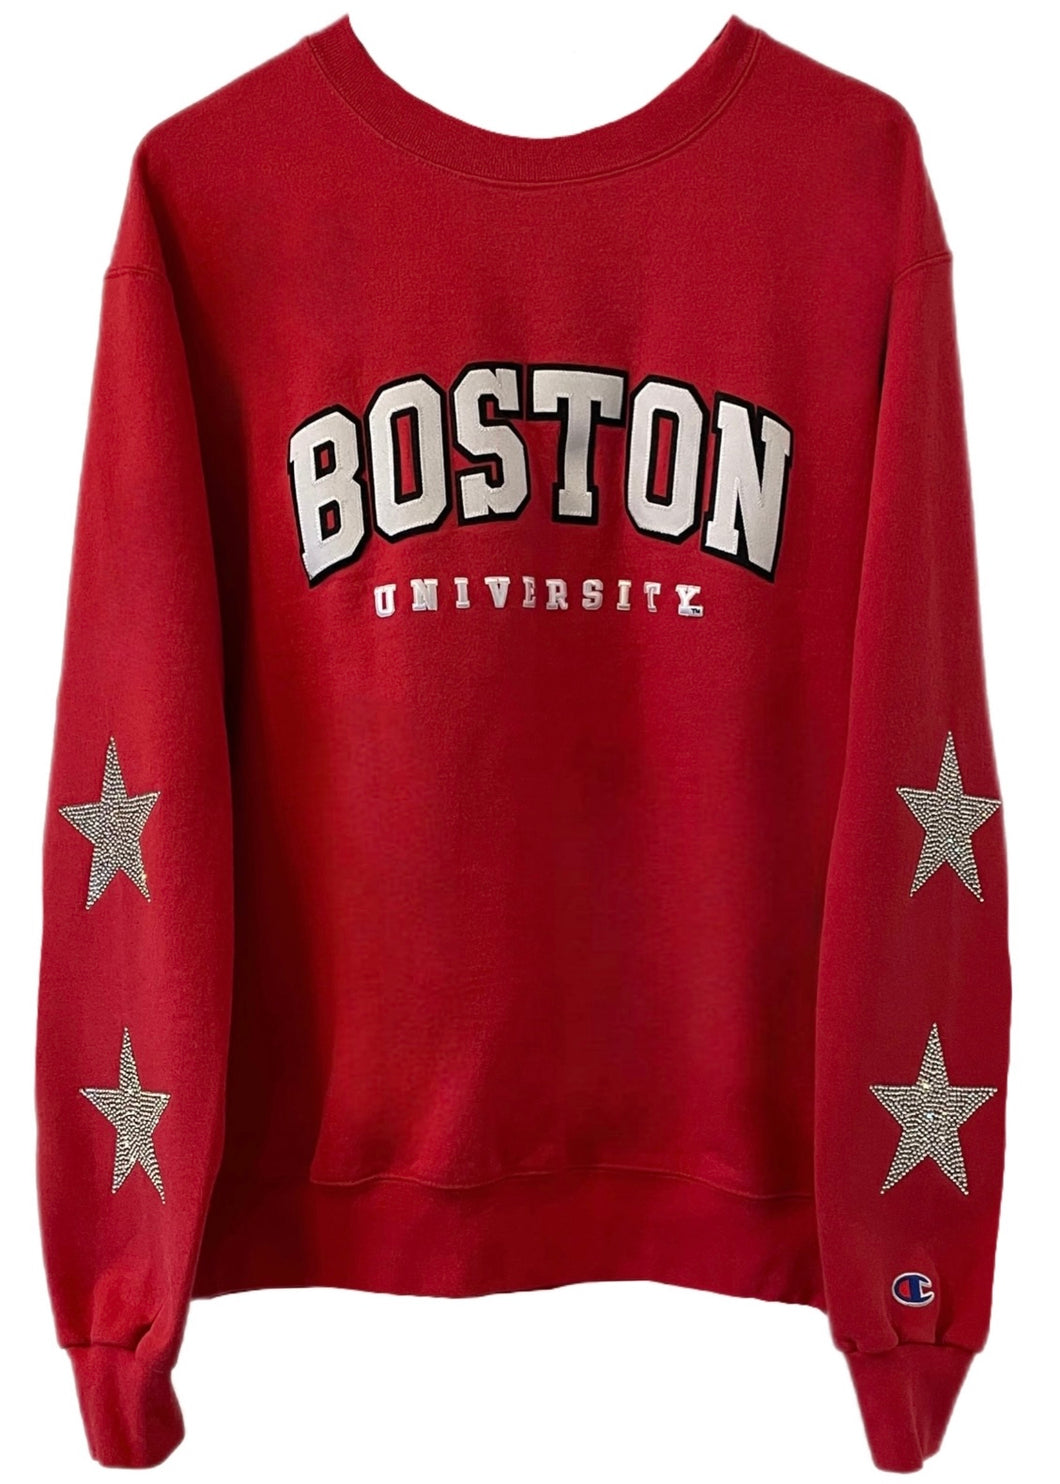 Boston University, BU One of a KIND Vintage Sweatshirt with Crystal Star Design